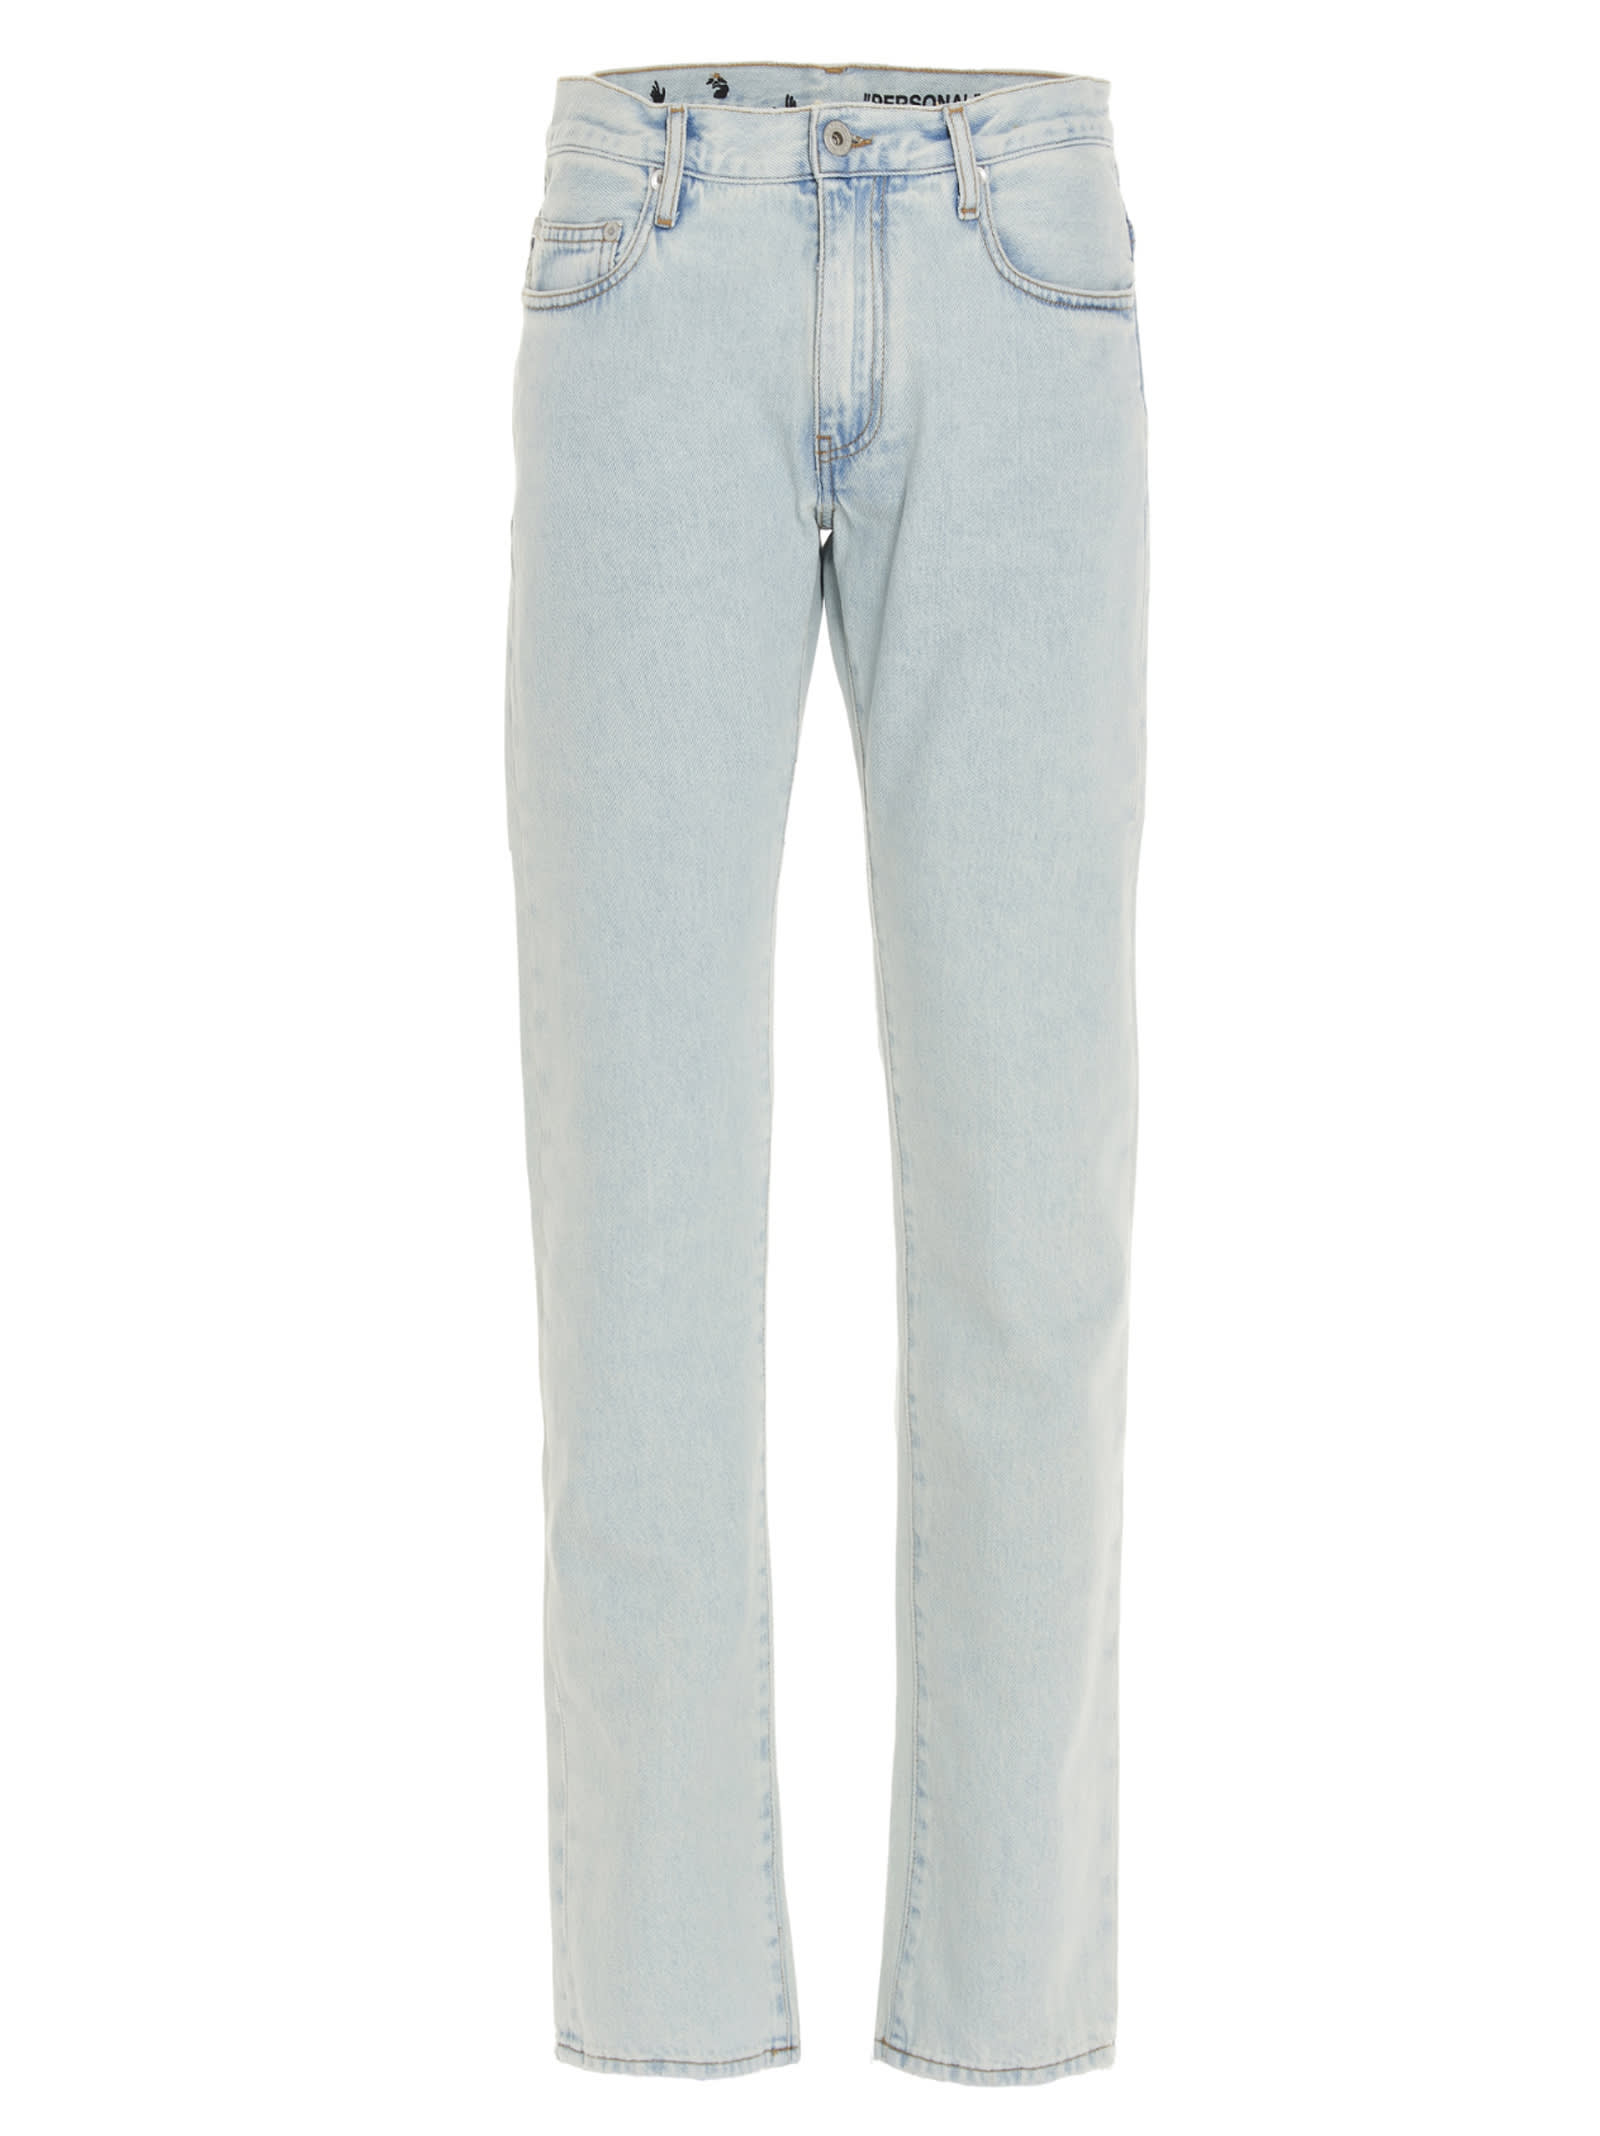 Off-white diag Pocket Jeans